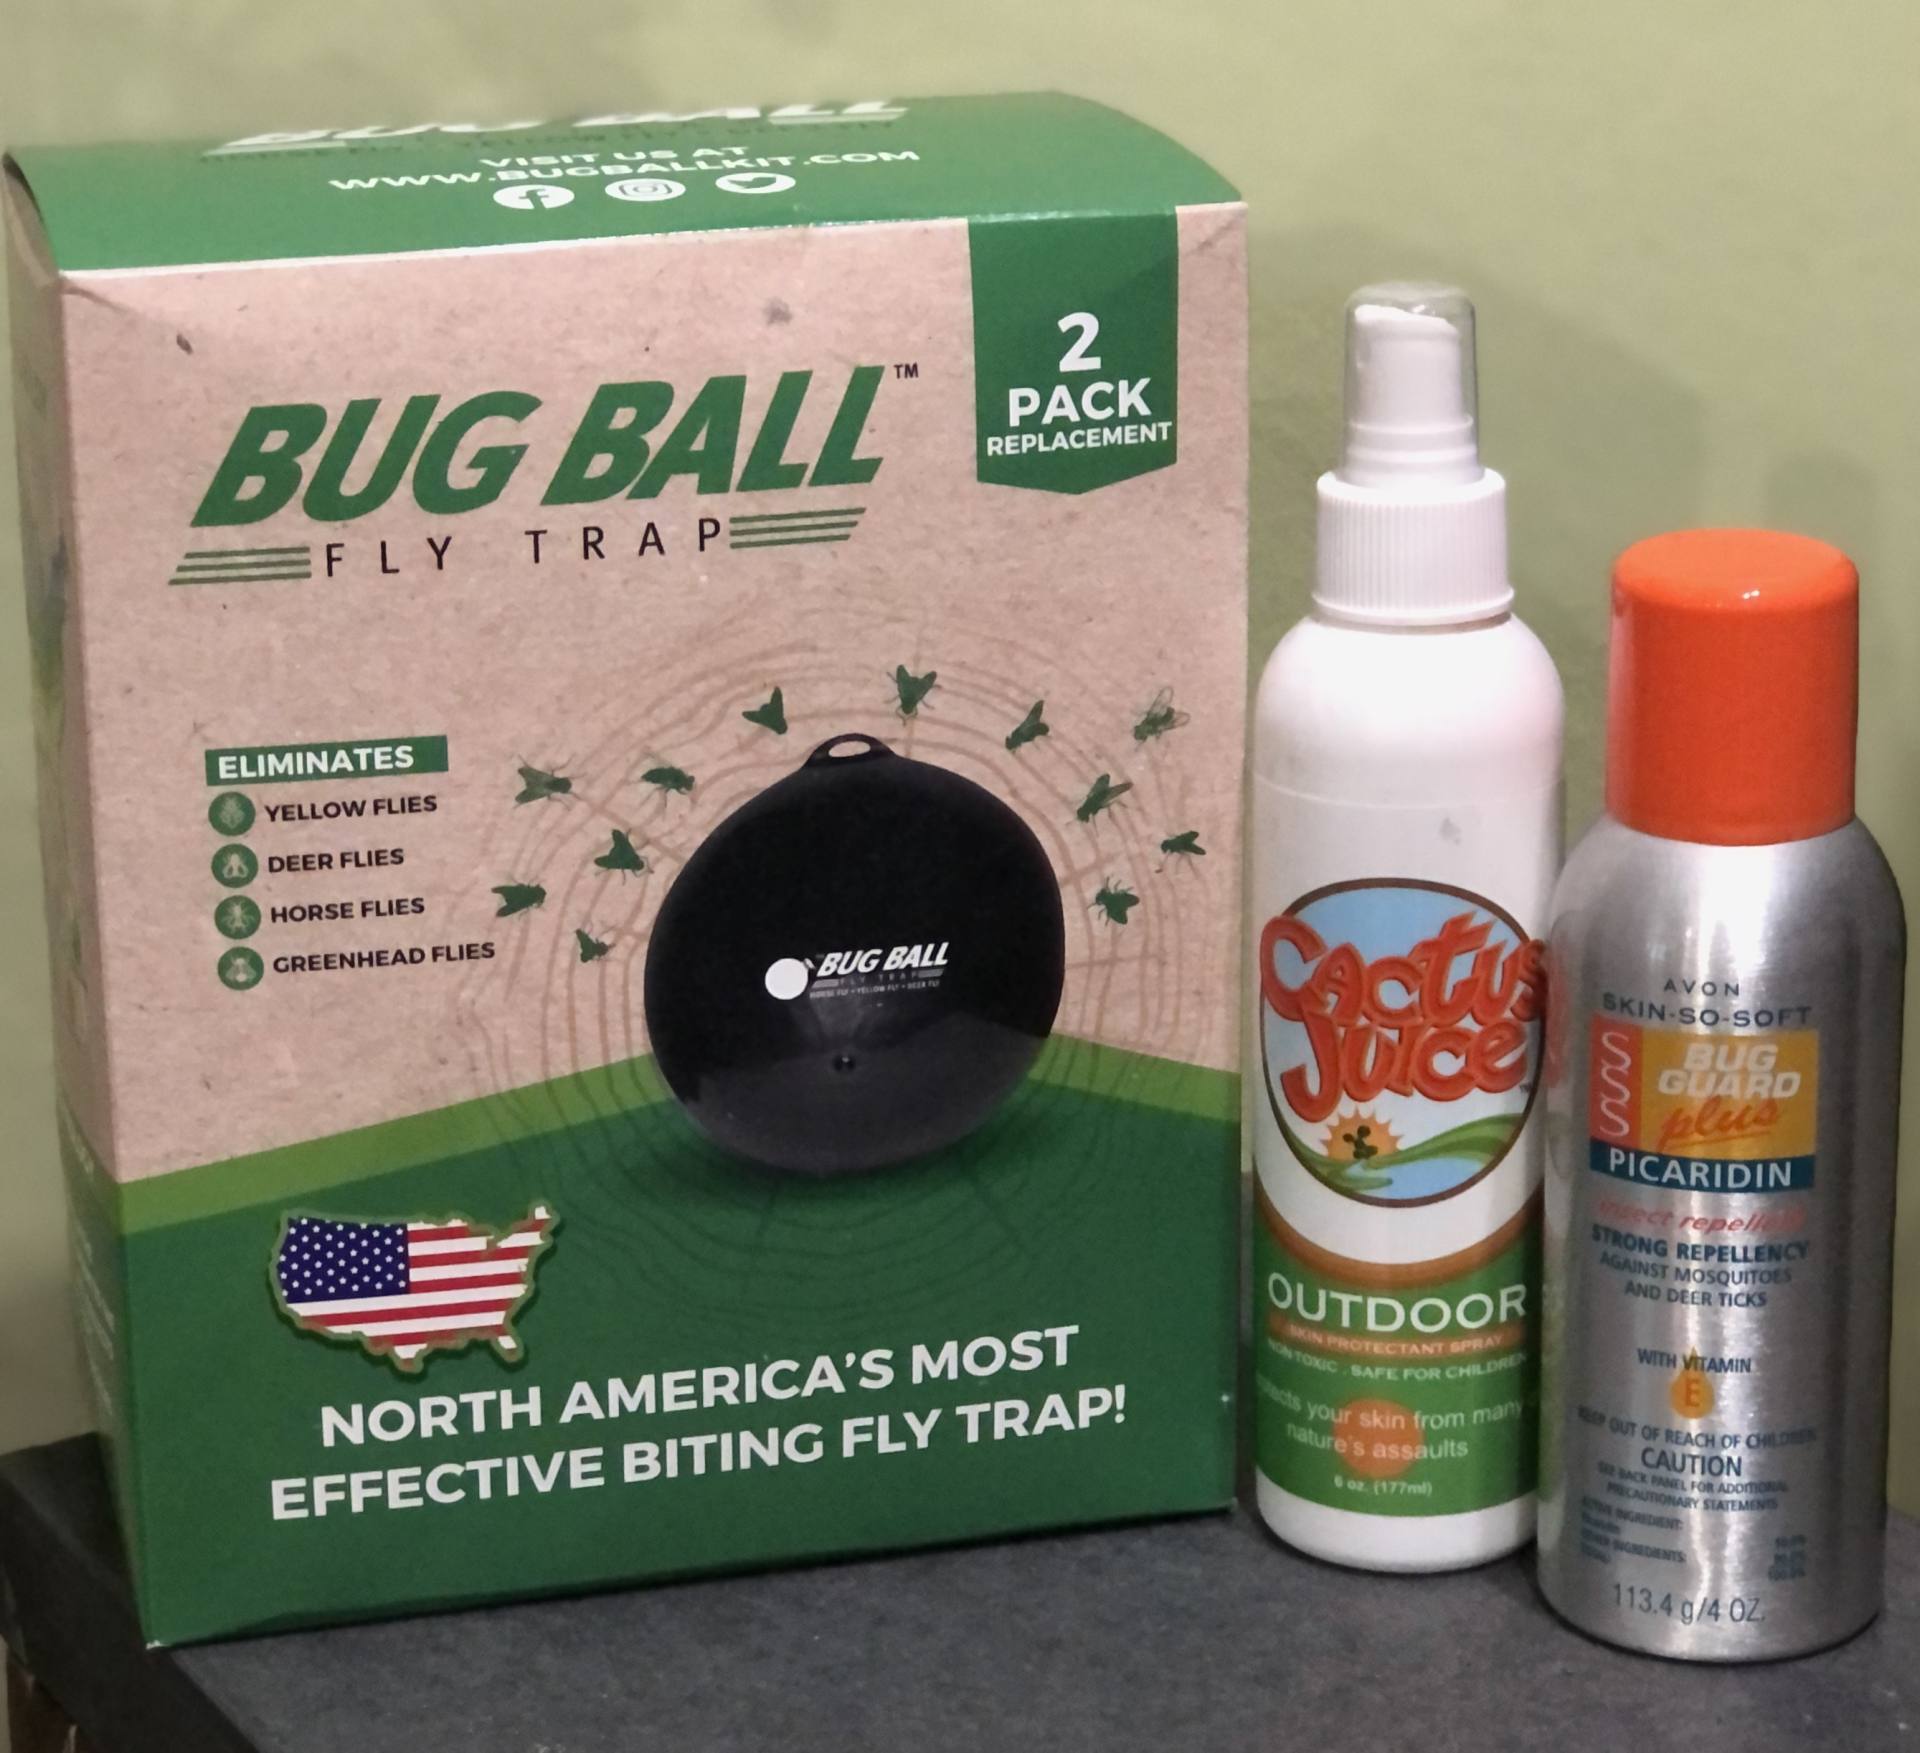 Bug Ball with Cactus Juice & Avon Skin So Soft Bug Guard